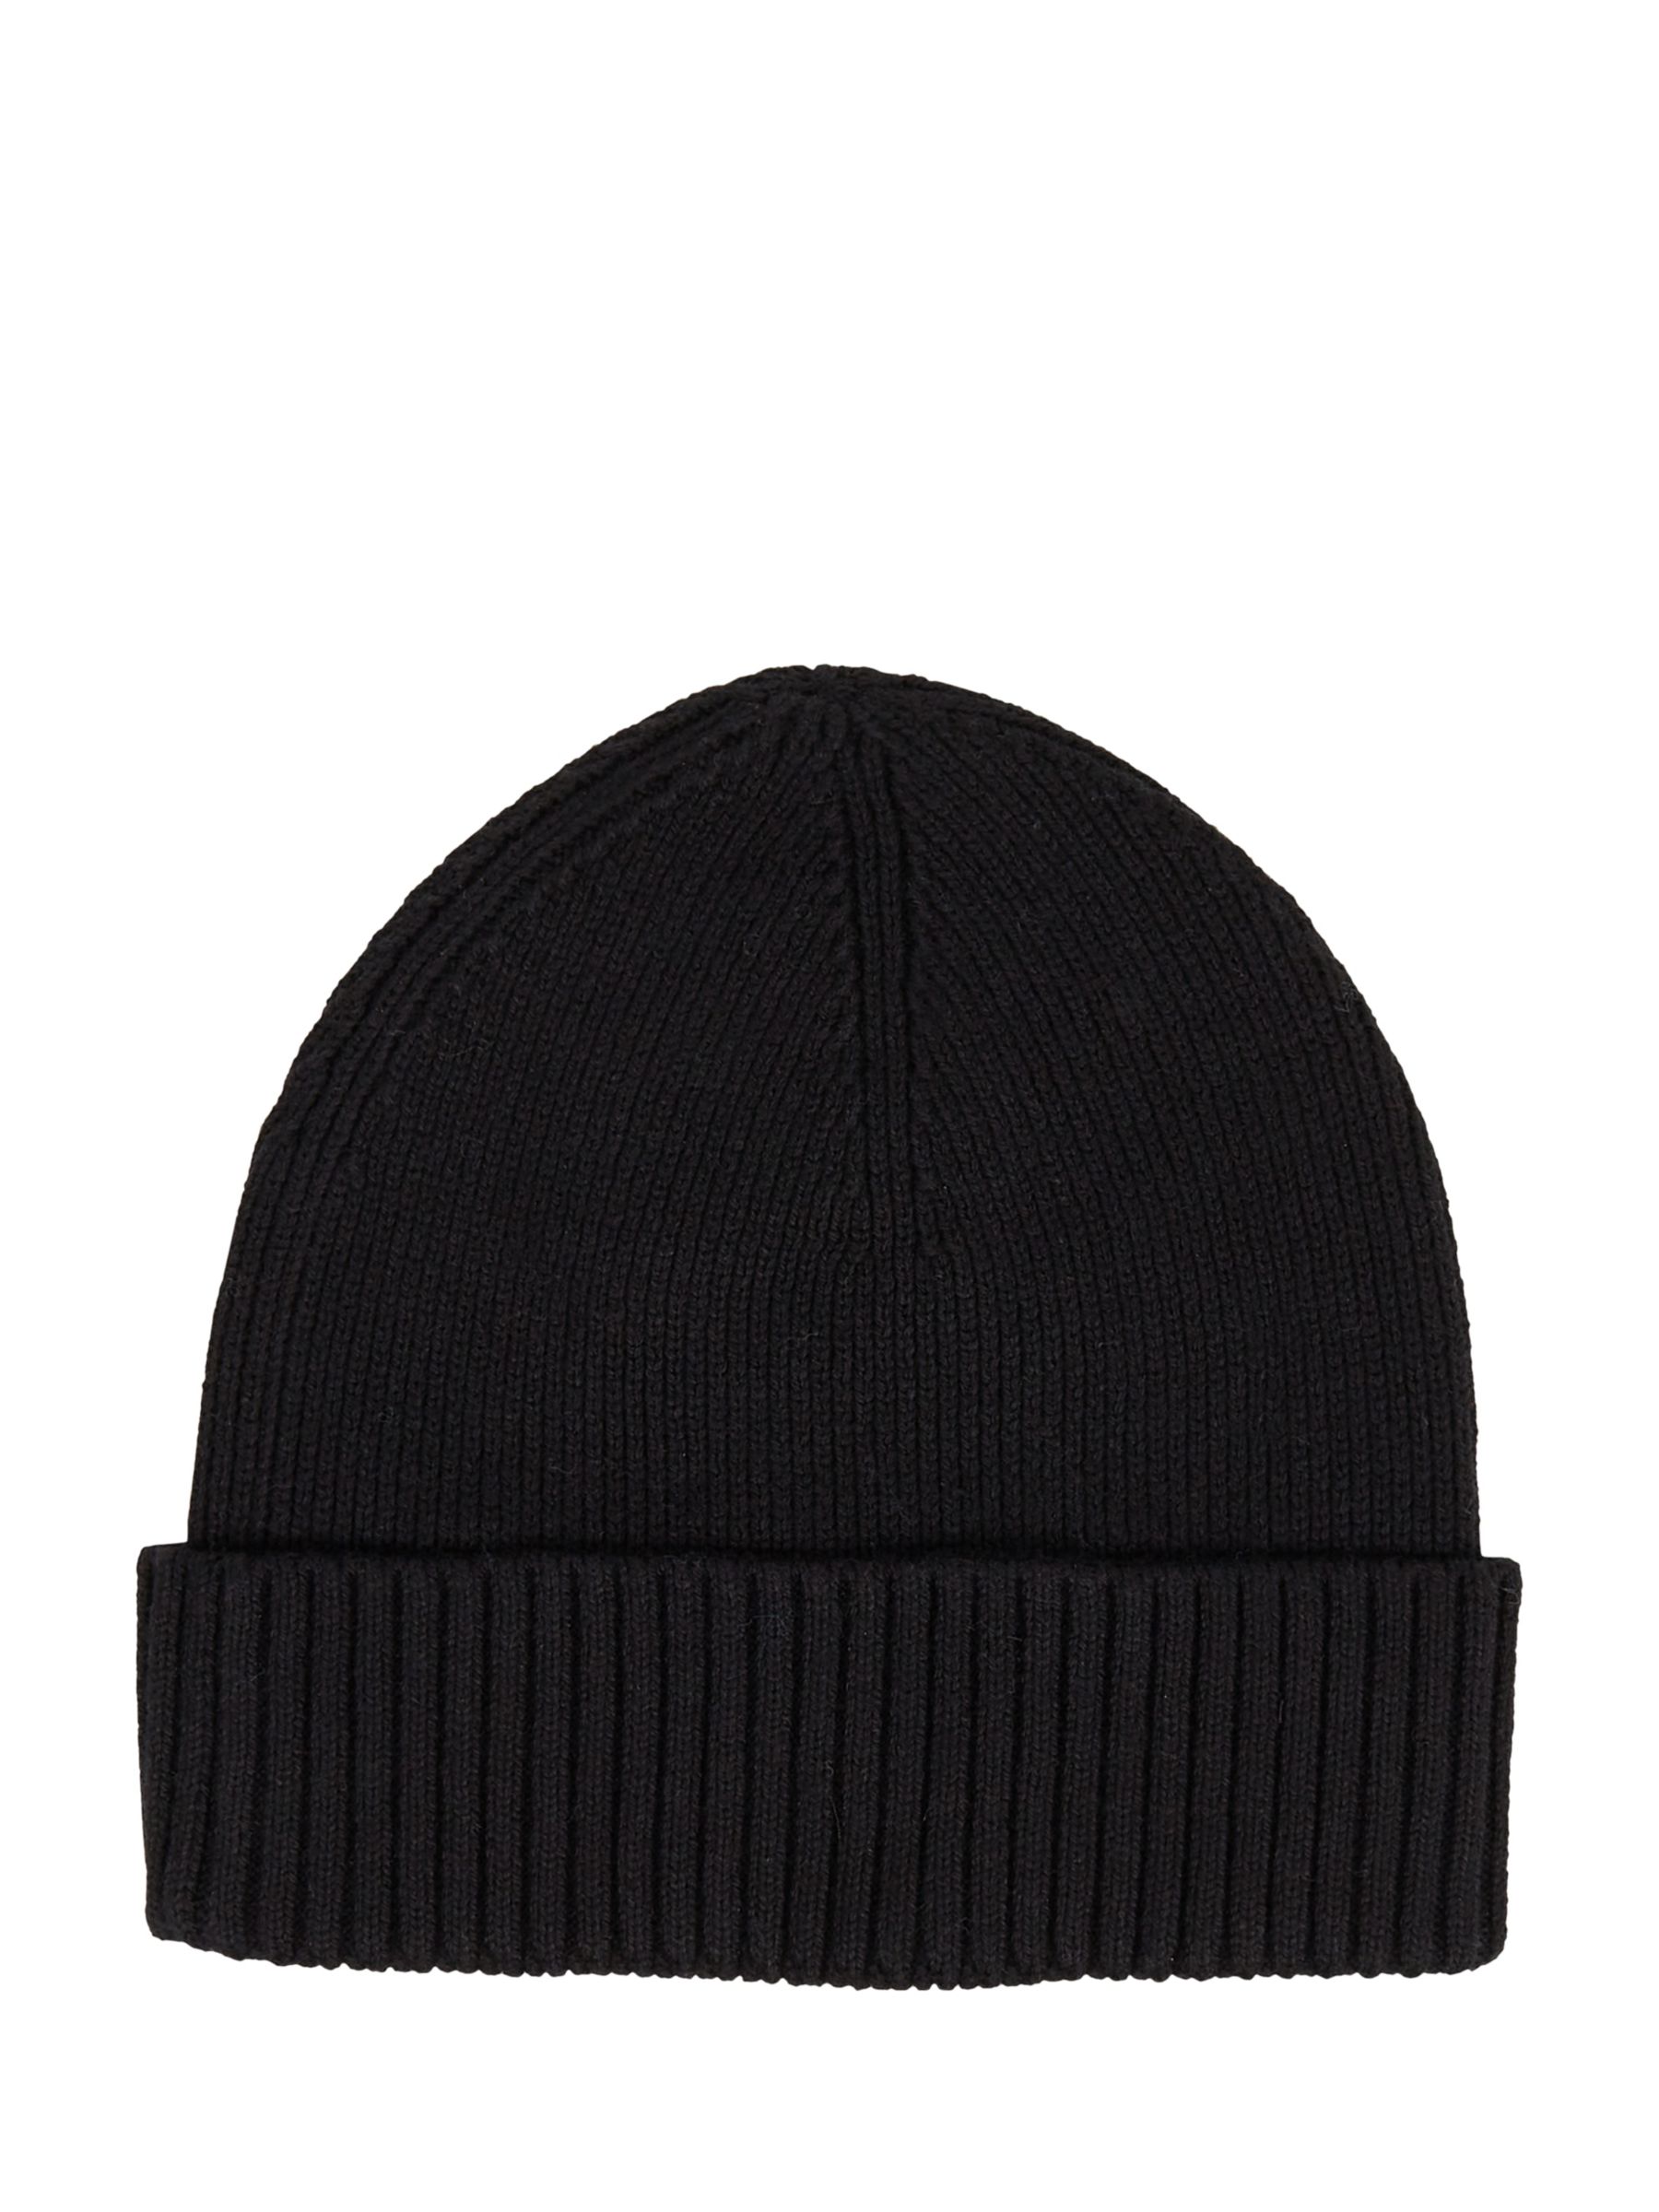 Tommy Hilfiger Essential Flag Cotton & Cashmere Knit Beanie Hat, Black, One Size